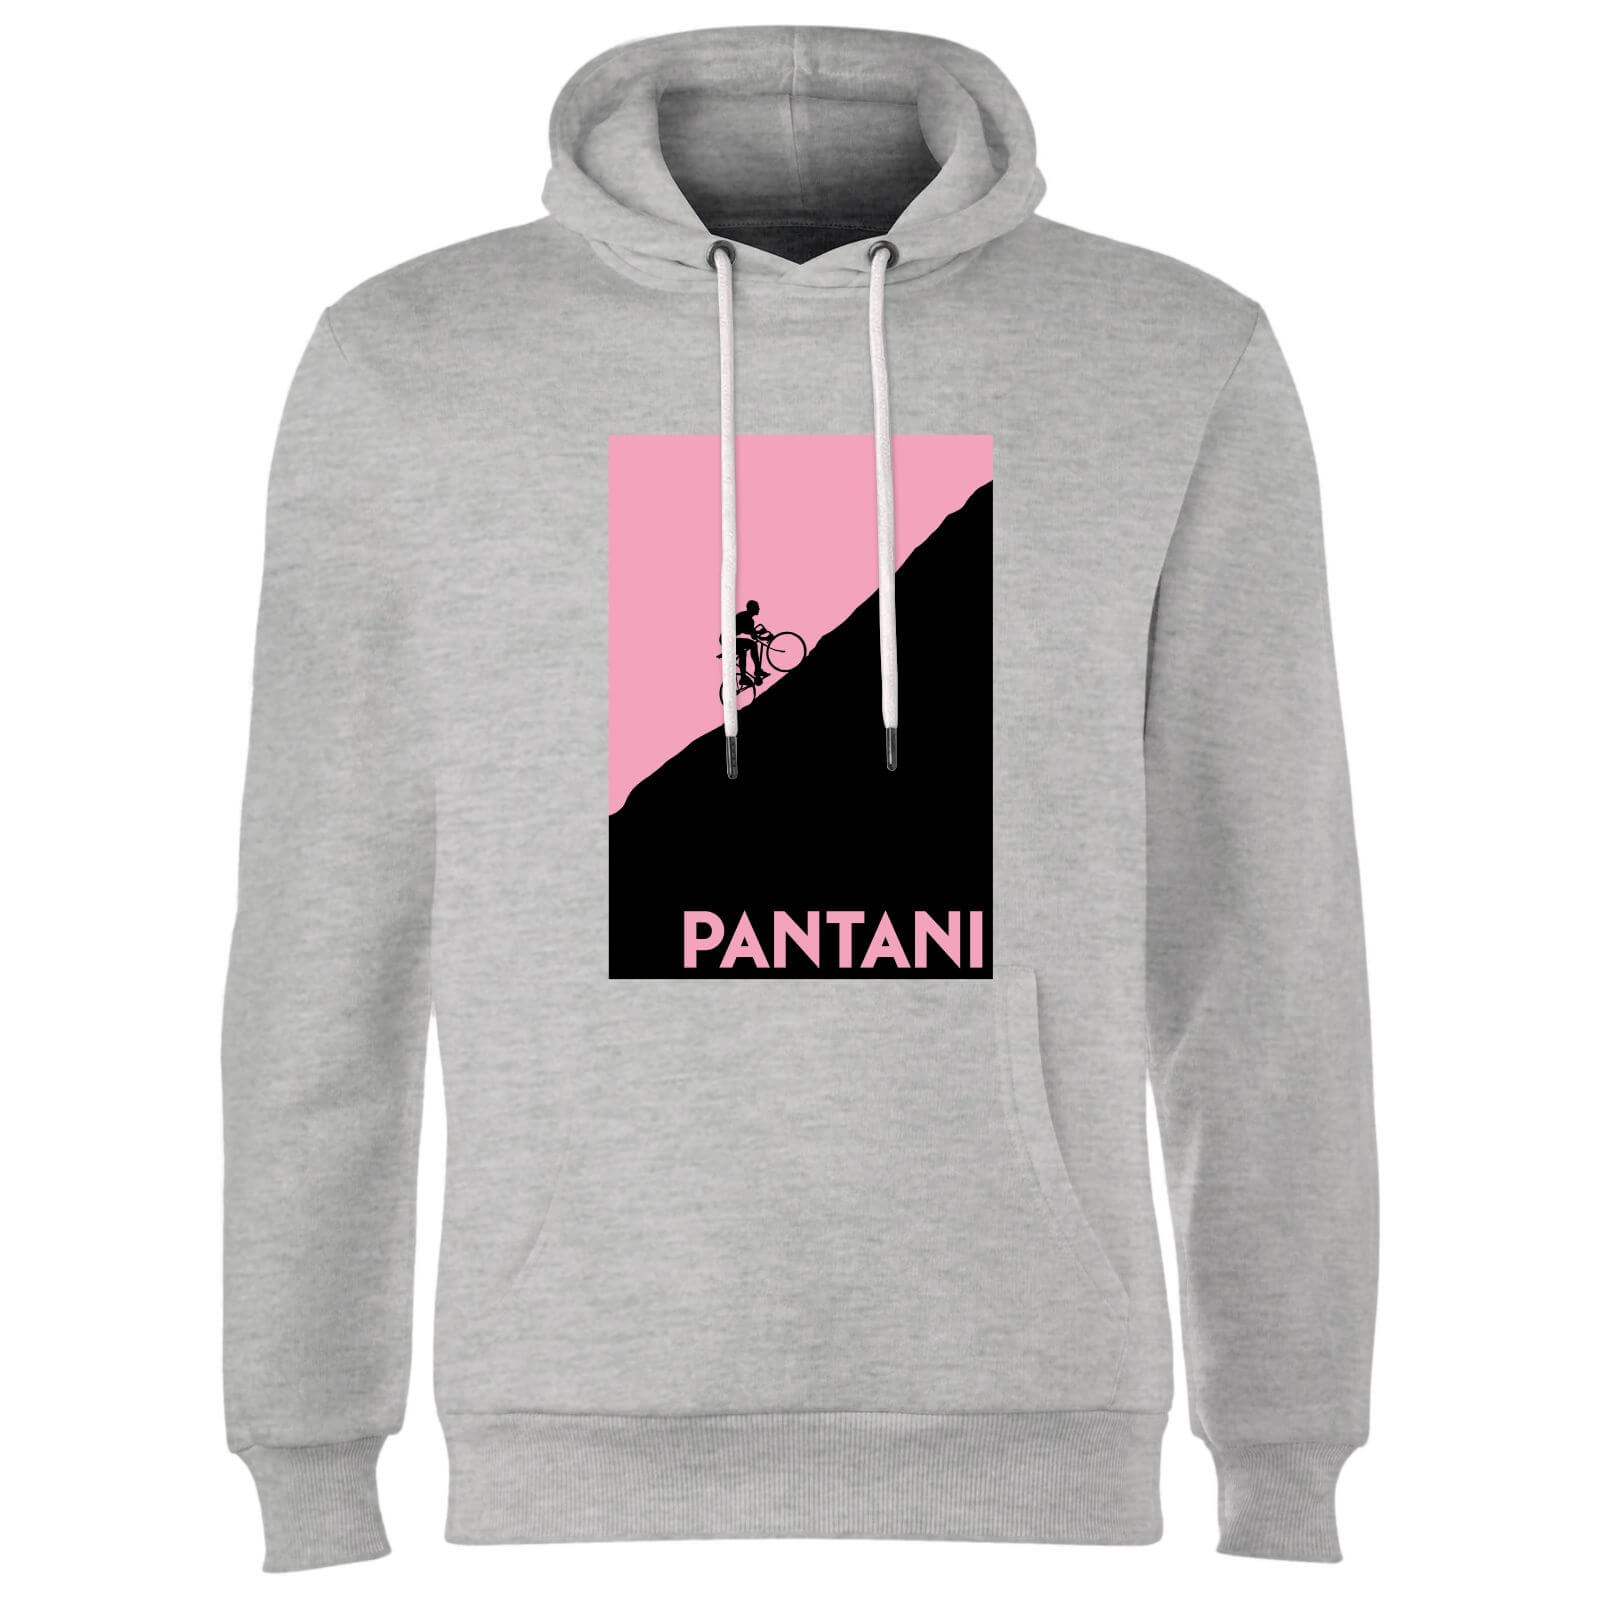 Pantani Hoodie - Grey - XXL - Grey